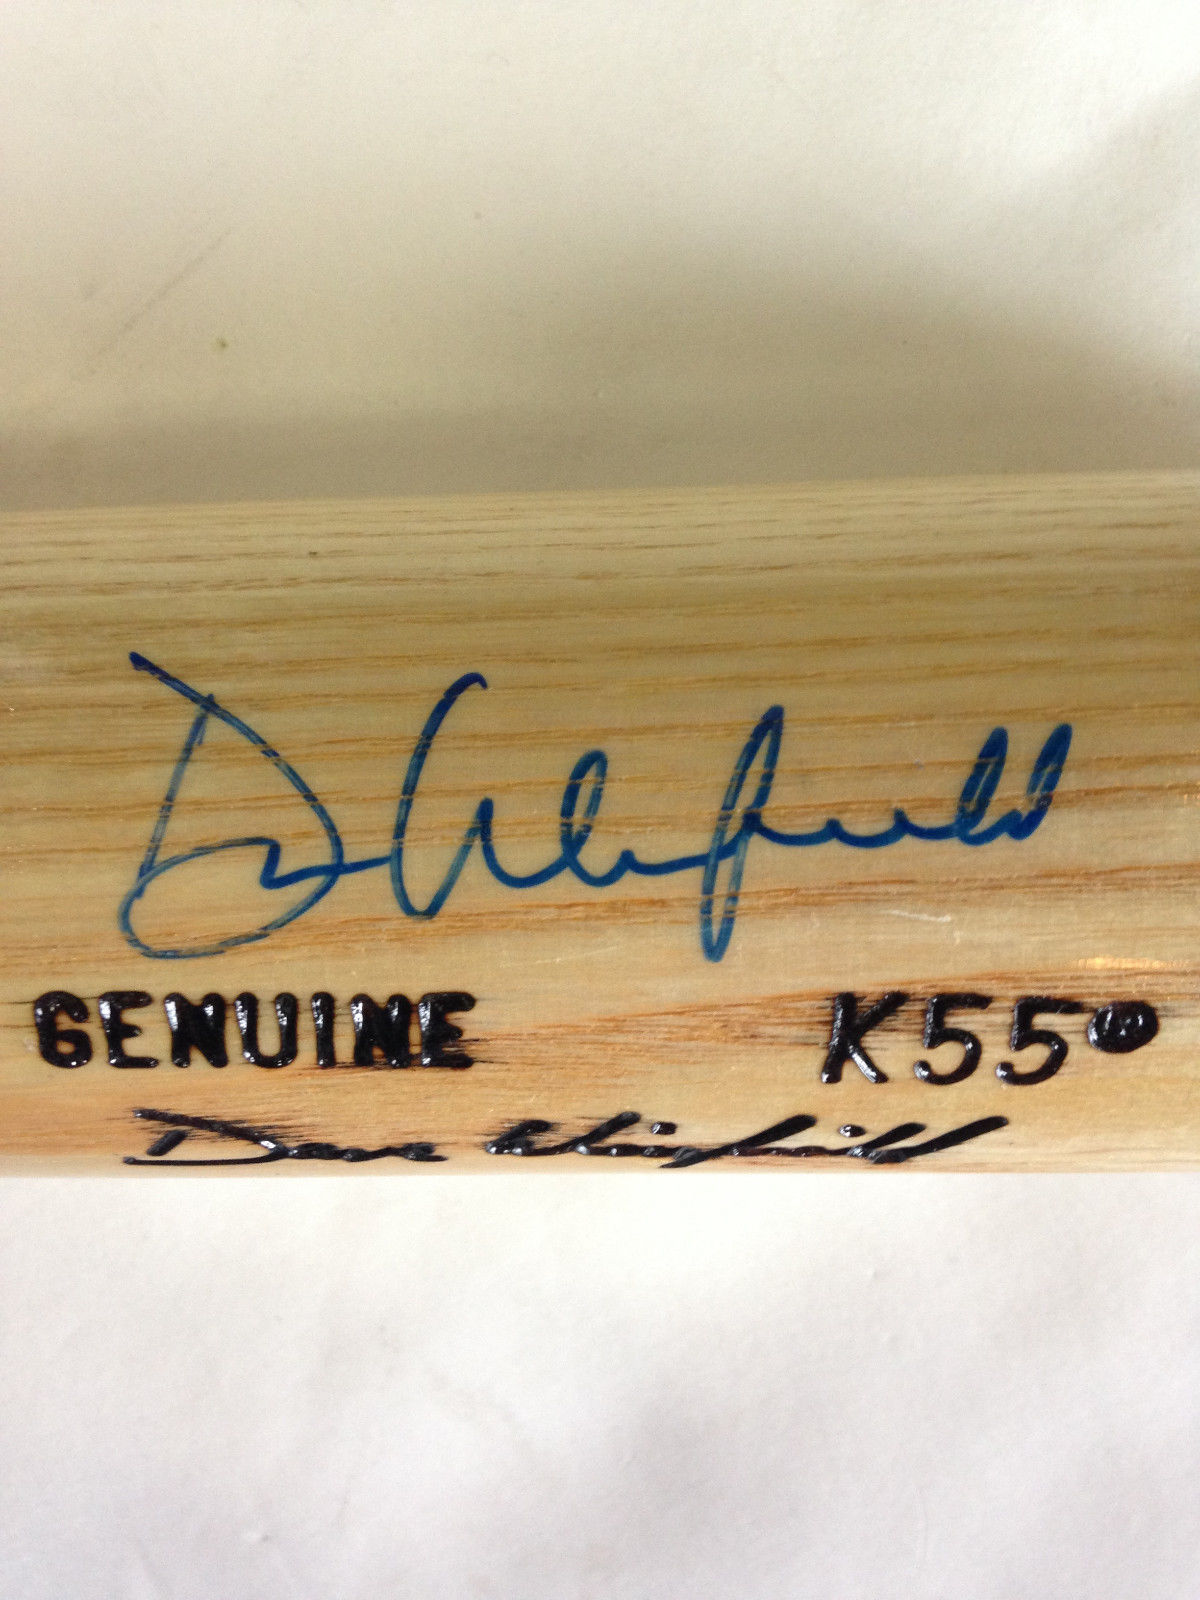 Dave Winfield Signed Louisville Slugger game model k55 baseball bat auto PSA